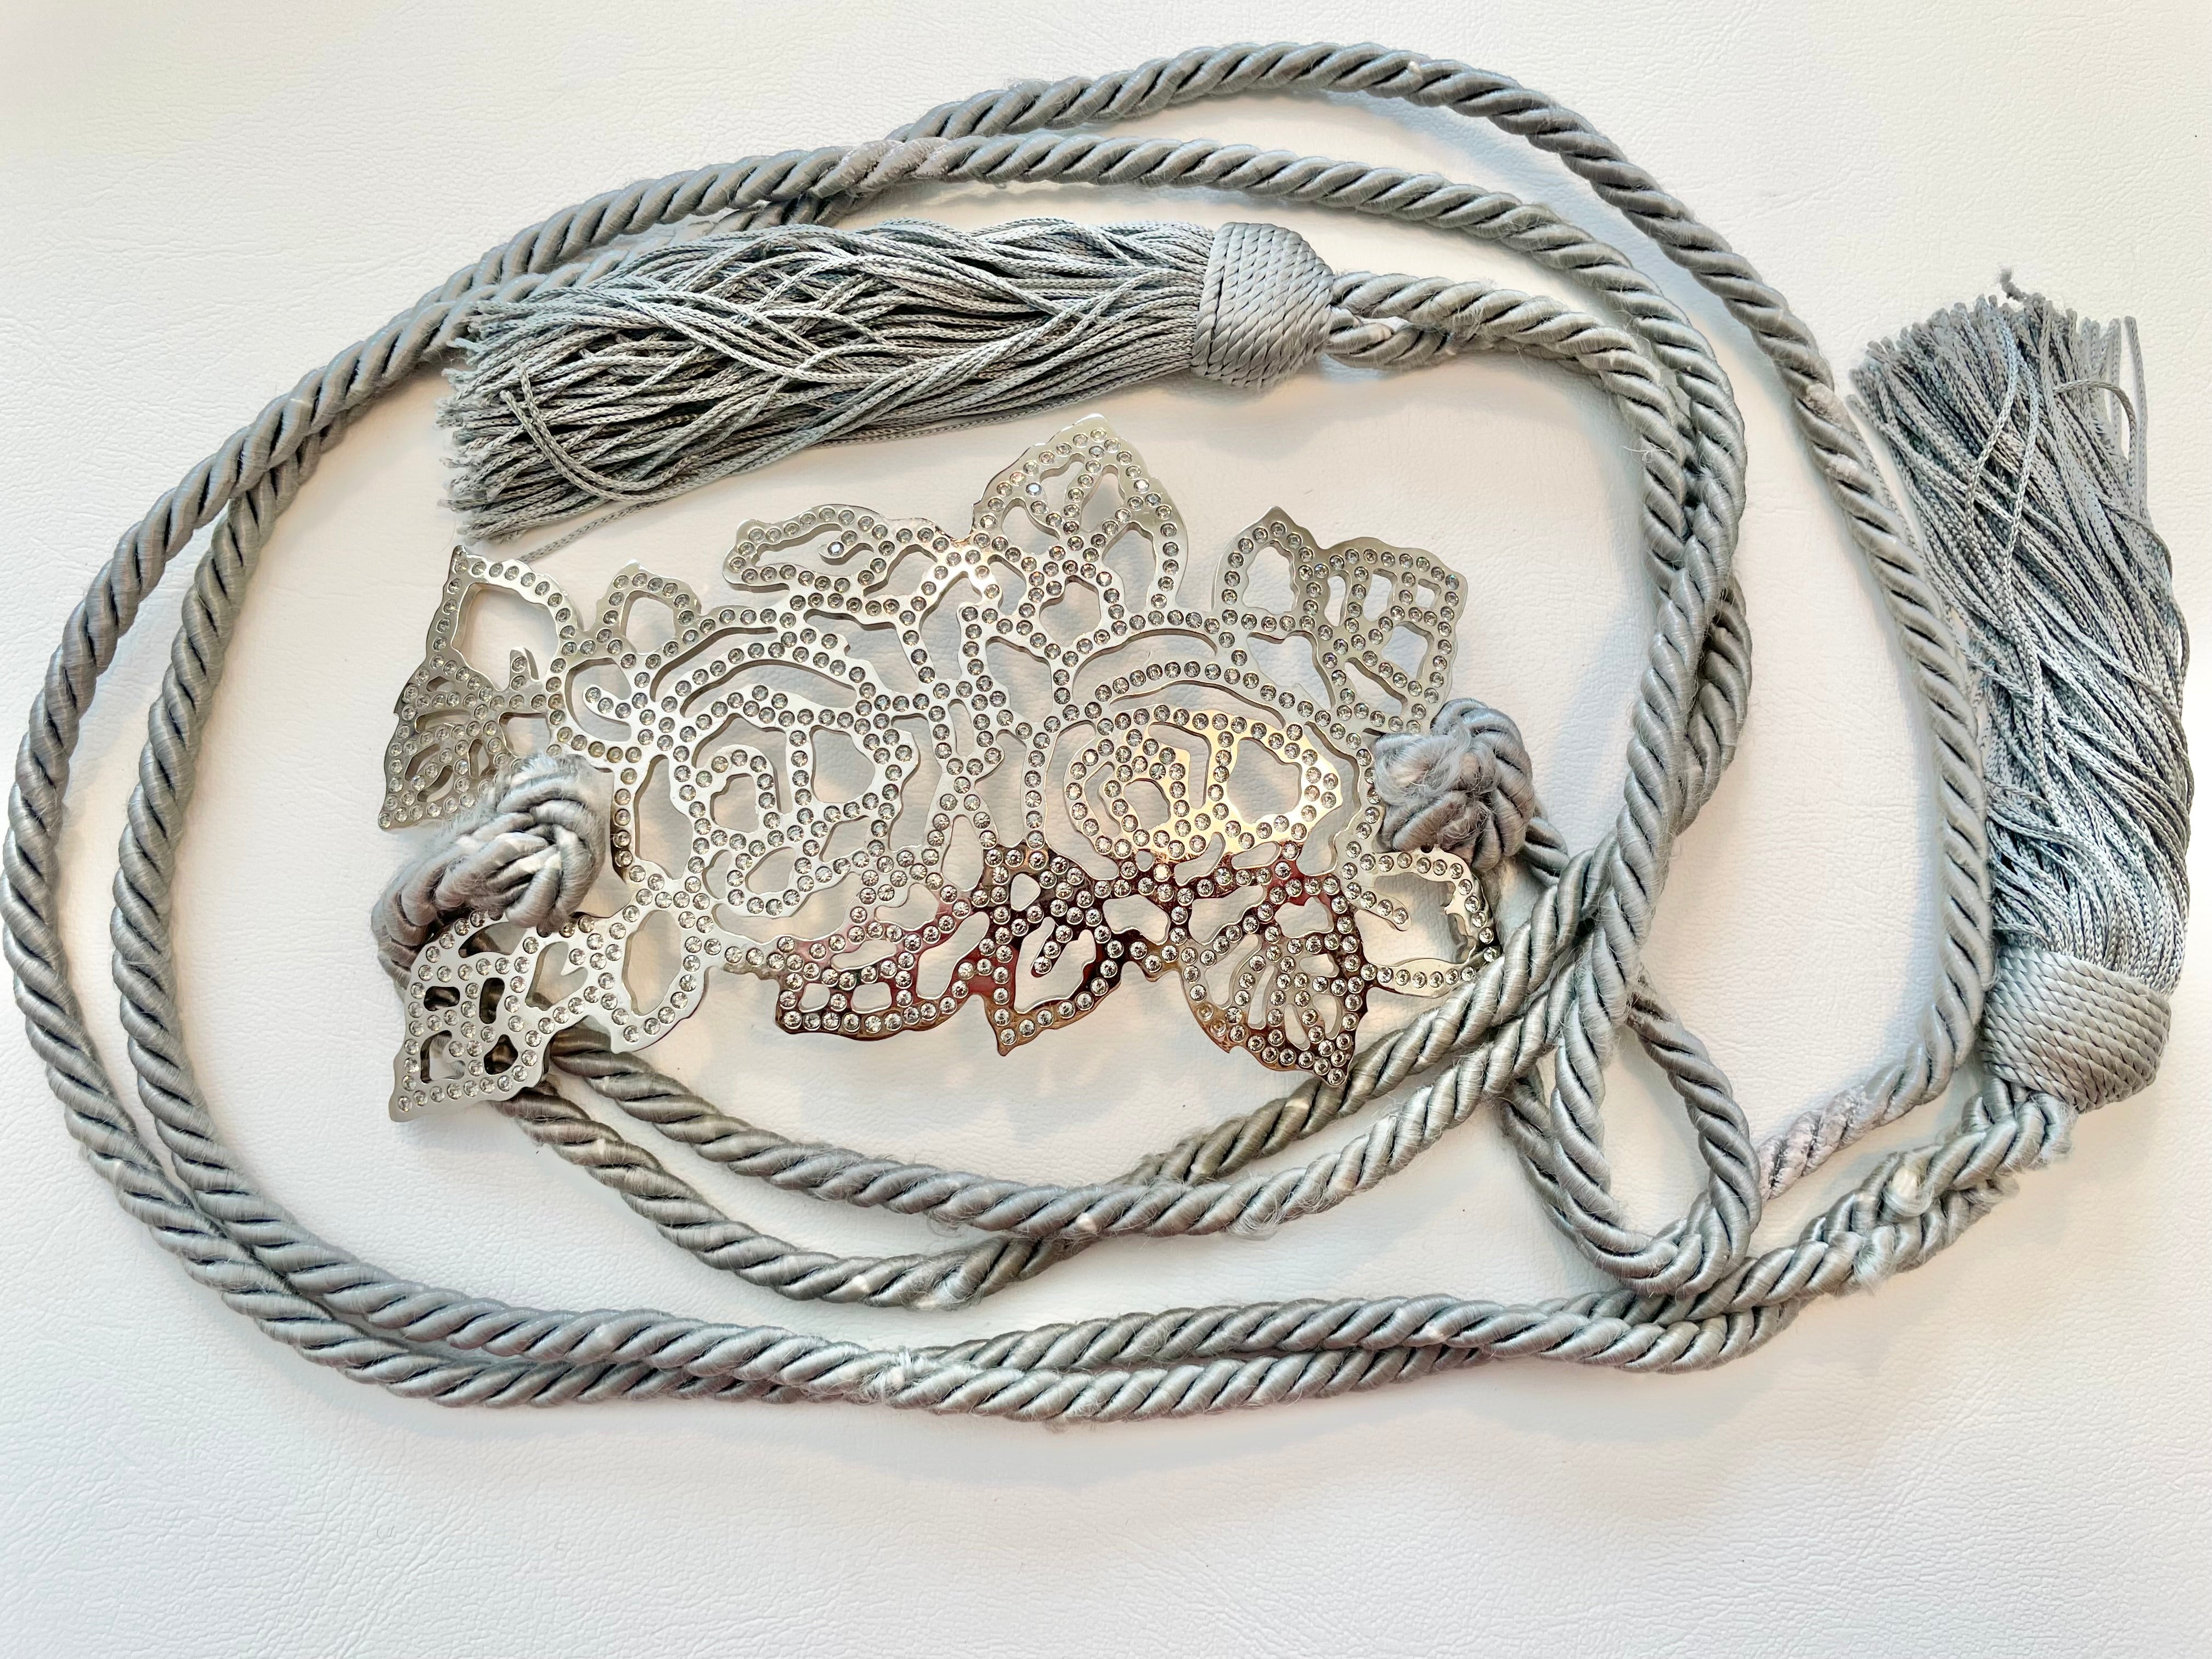 Authentic vintage Valentino gray silk cord stunning belt... love the tassels.